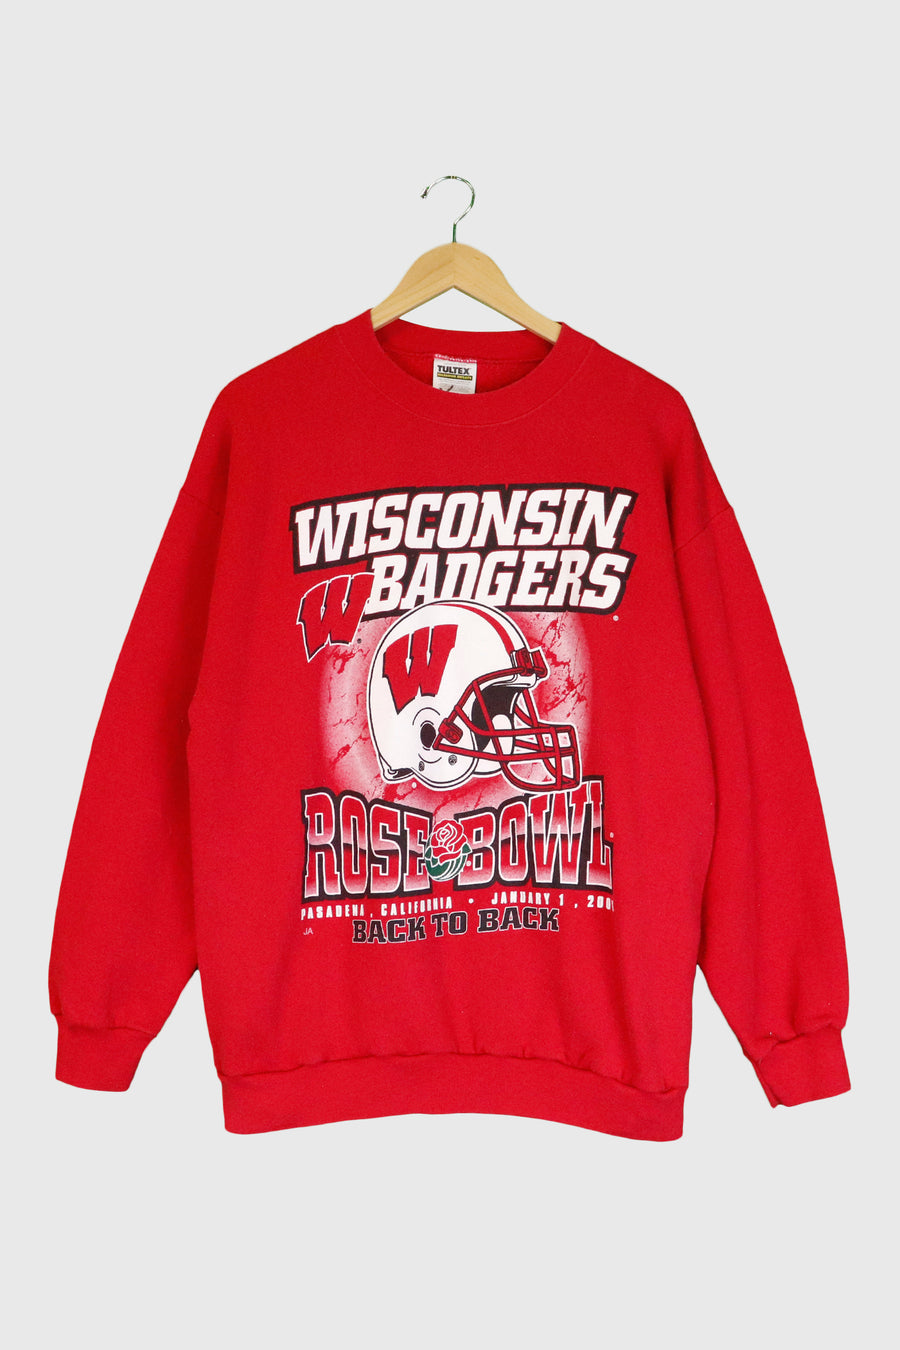 Vintage 2000 NFL Wiscon Badgers Rose Bowl Sweatshirt Sz L